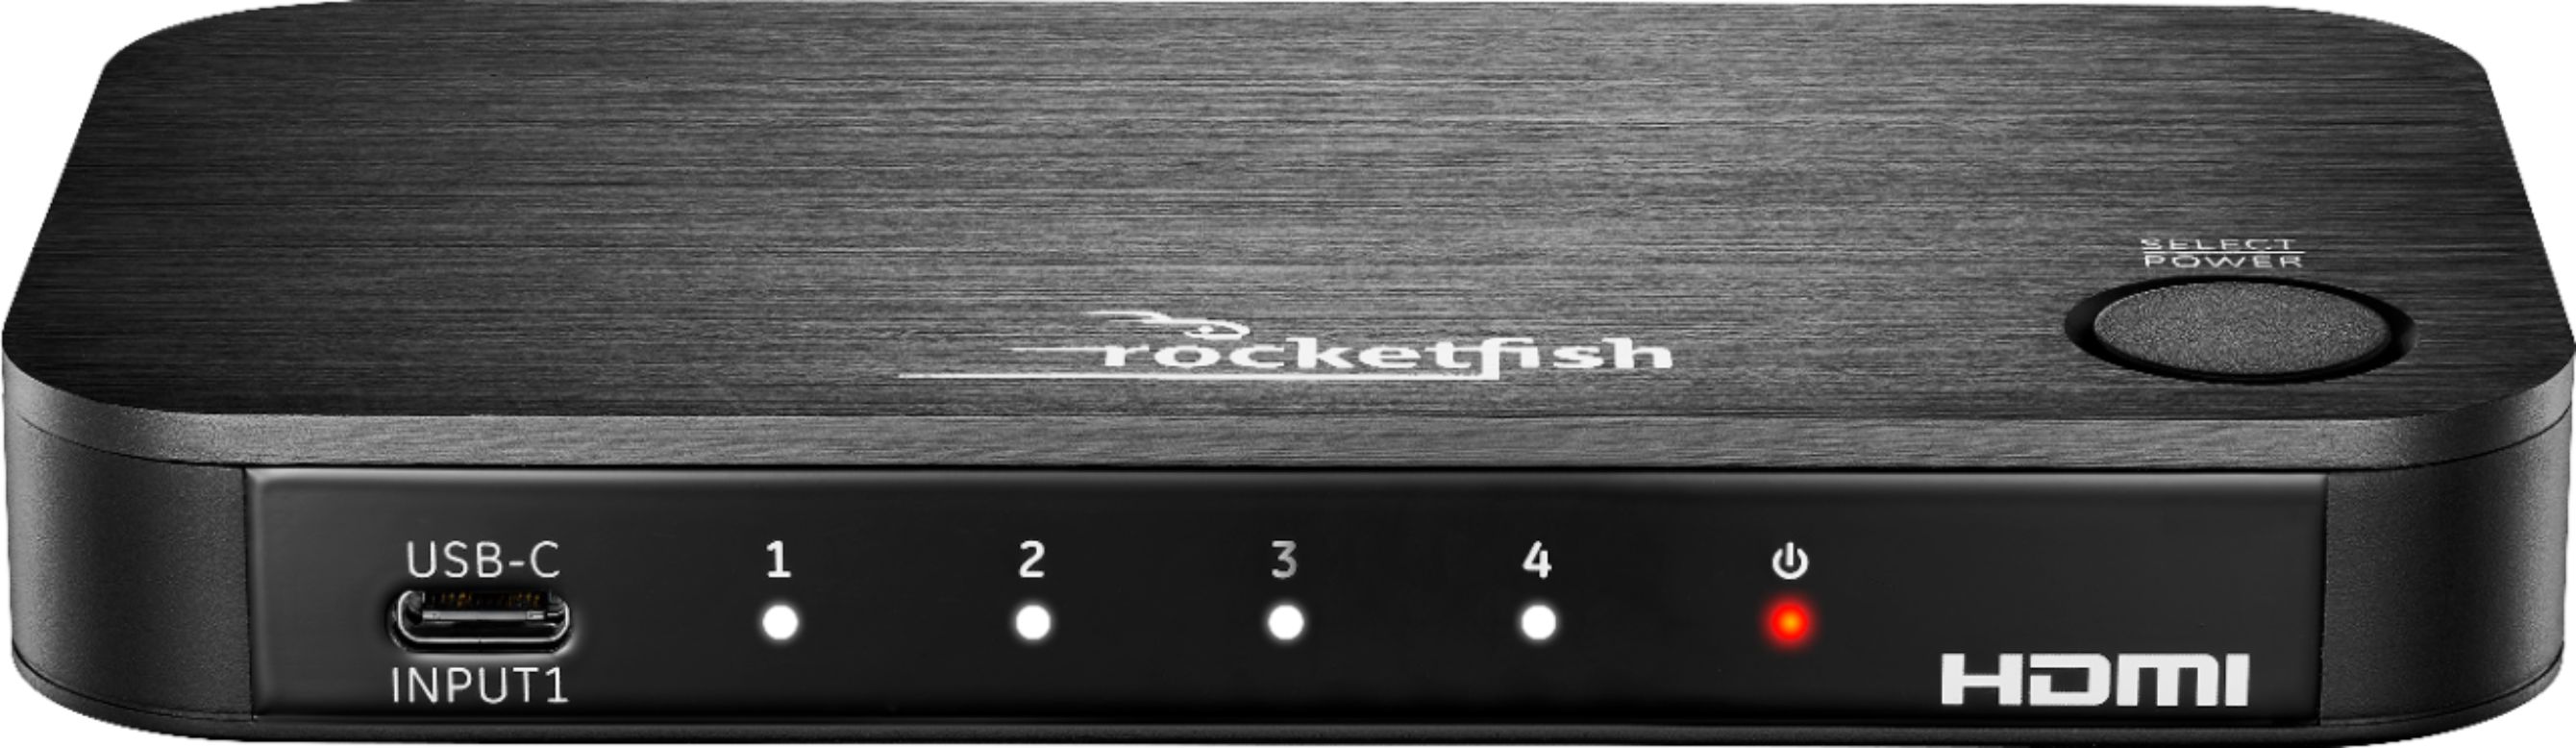 Rocketfish™ 4-Port HDMI Switch with USB-C RF-G1480 - Best Buy